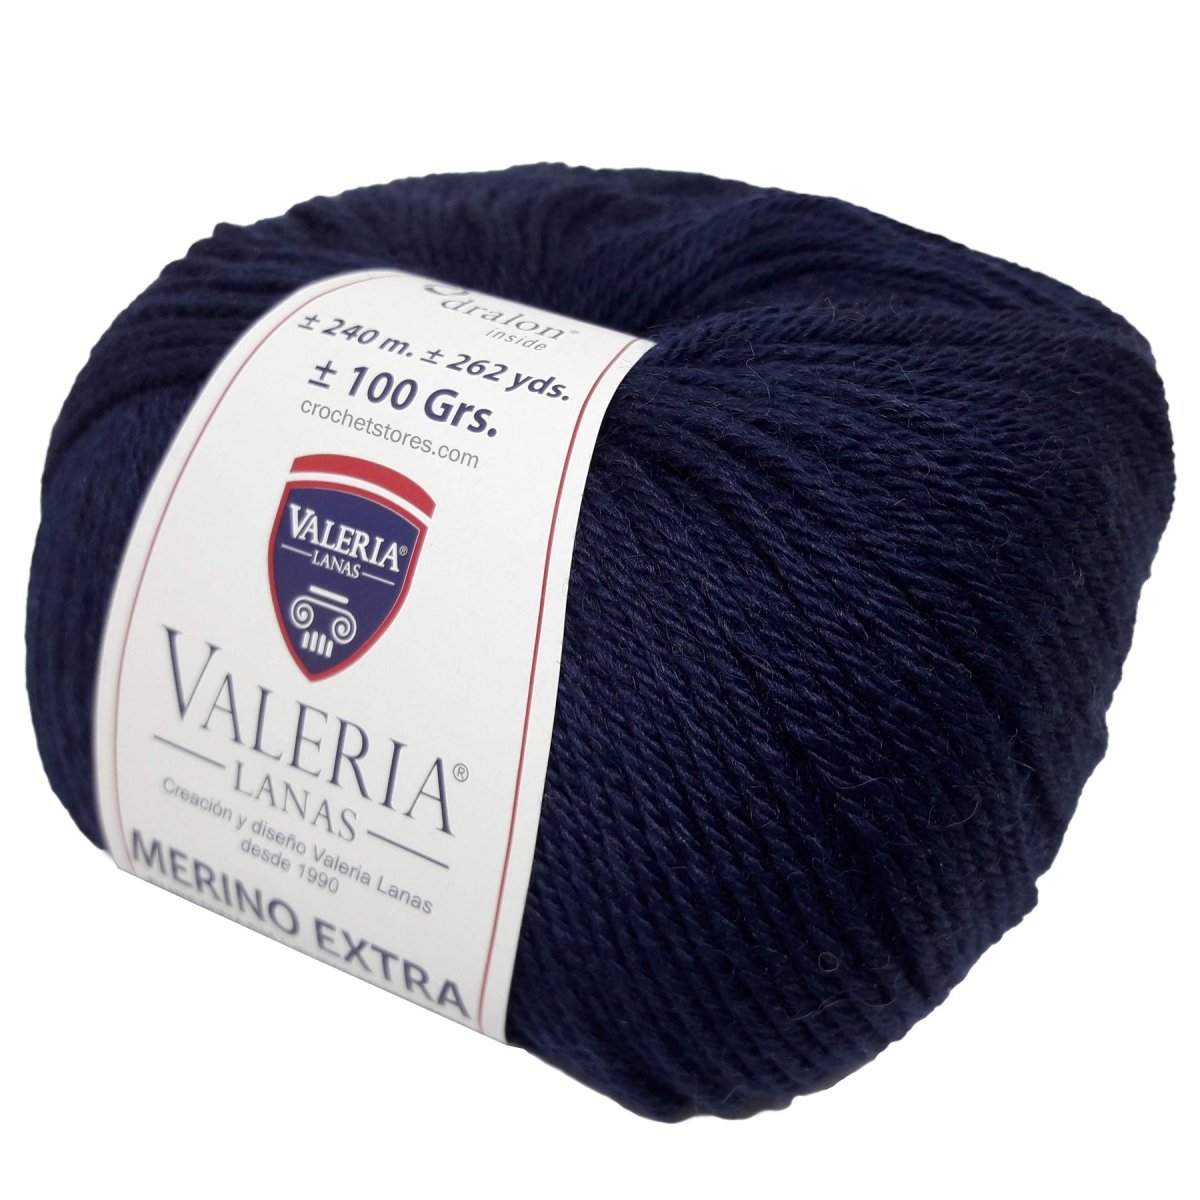 MERINO EXTRA - Crochetstores1009-0988435411404352